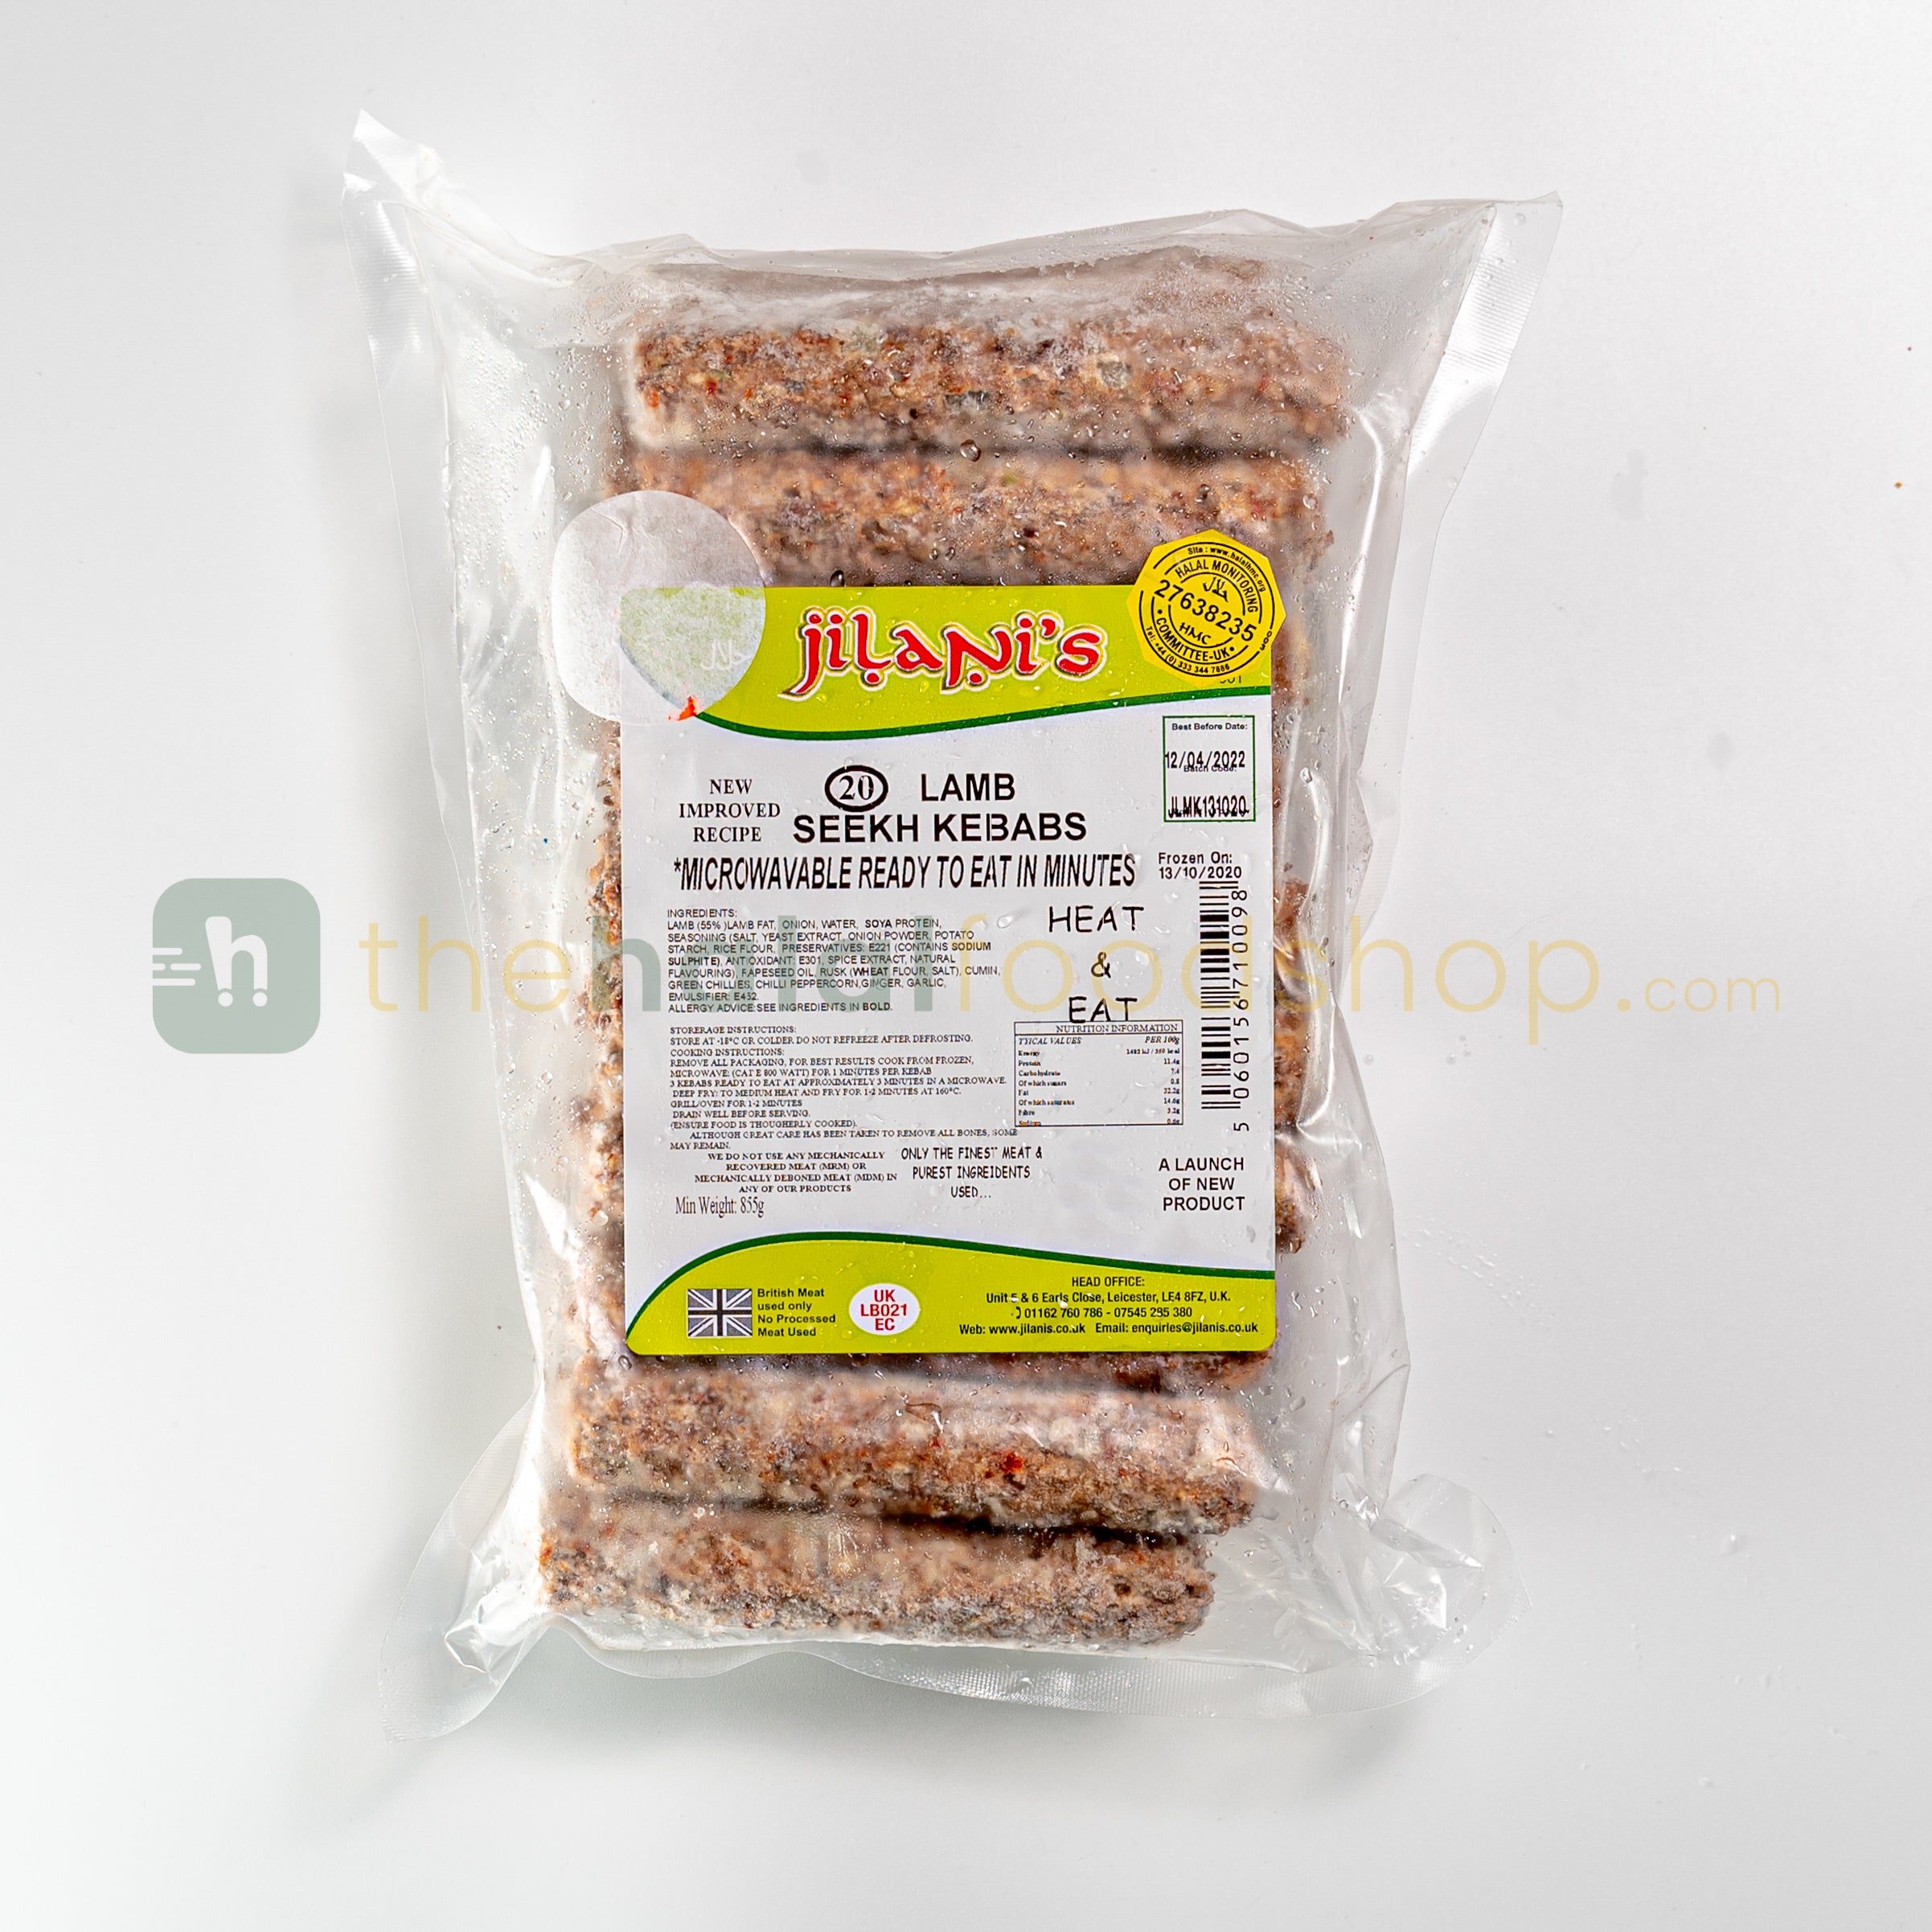 Jilani's Lamb Seekh Kebabs 20pc (875g)